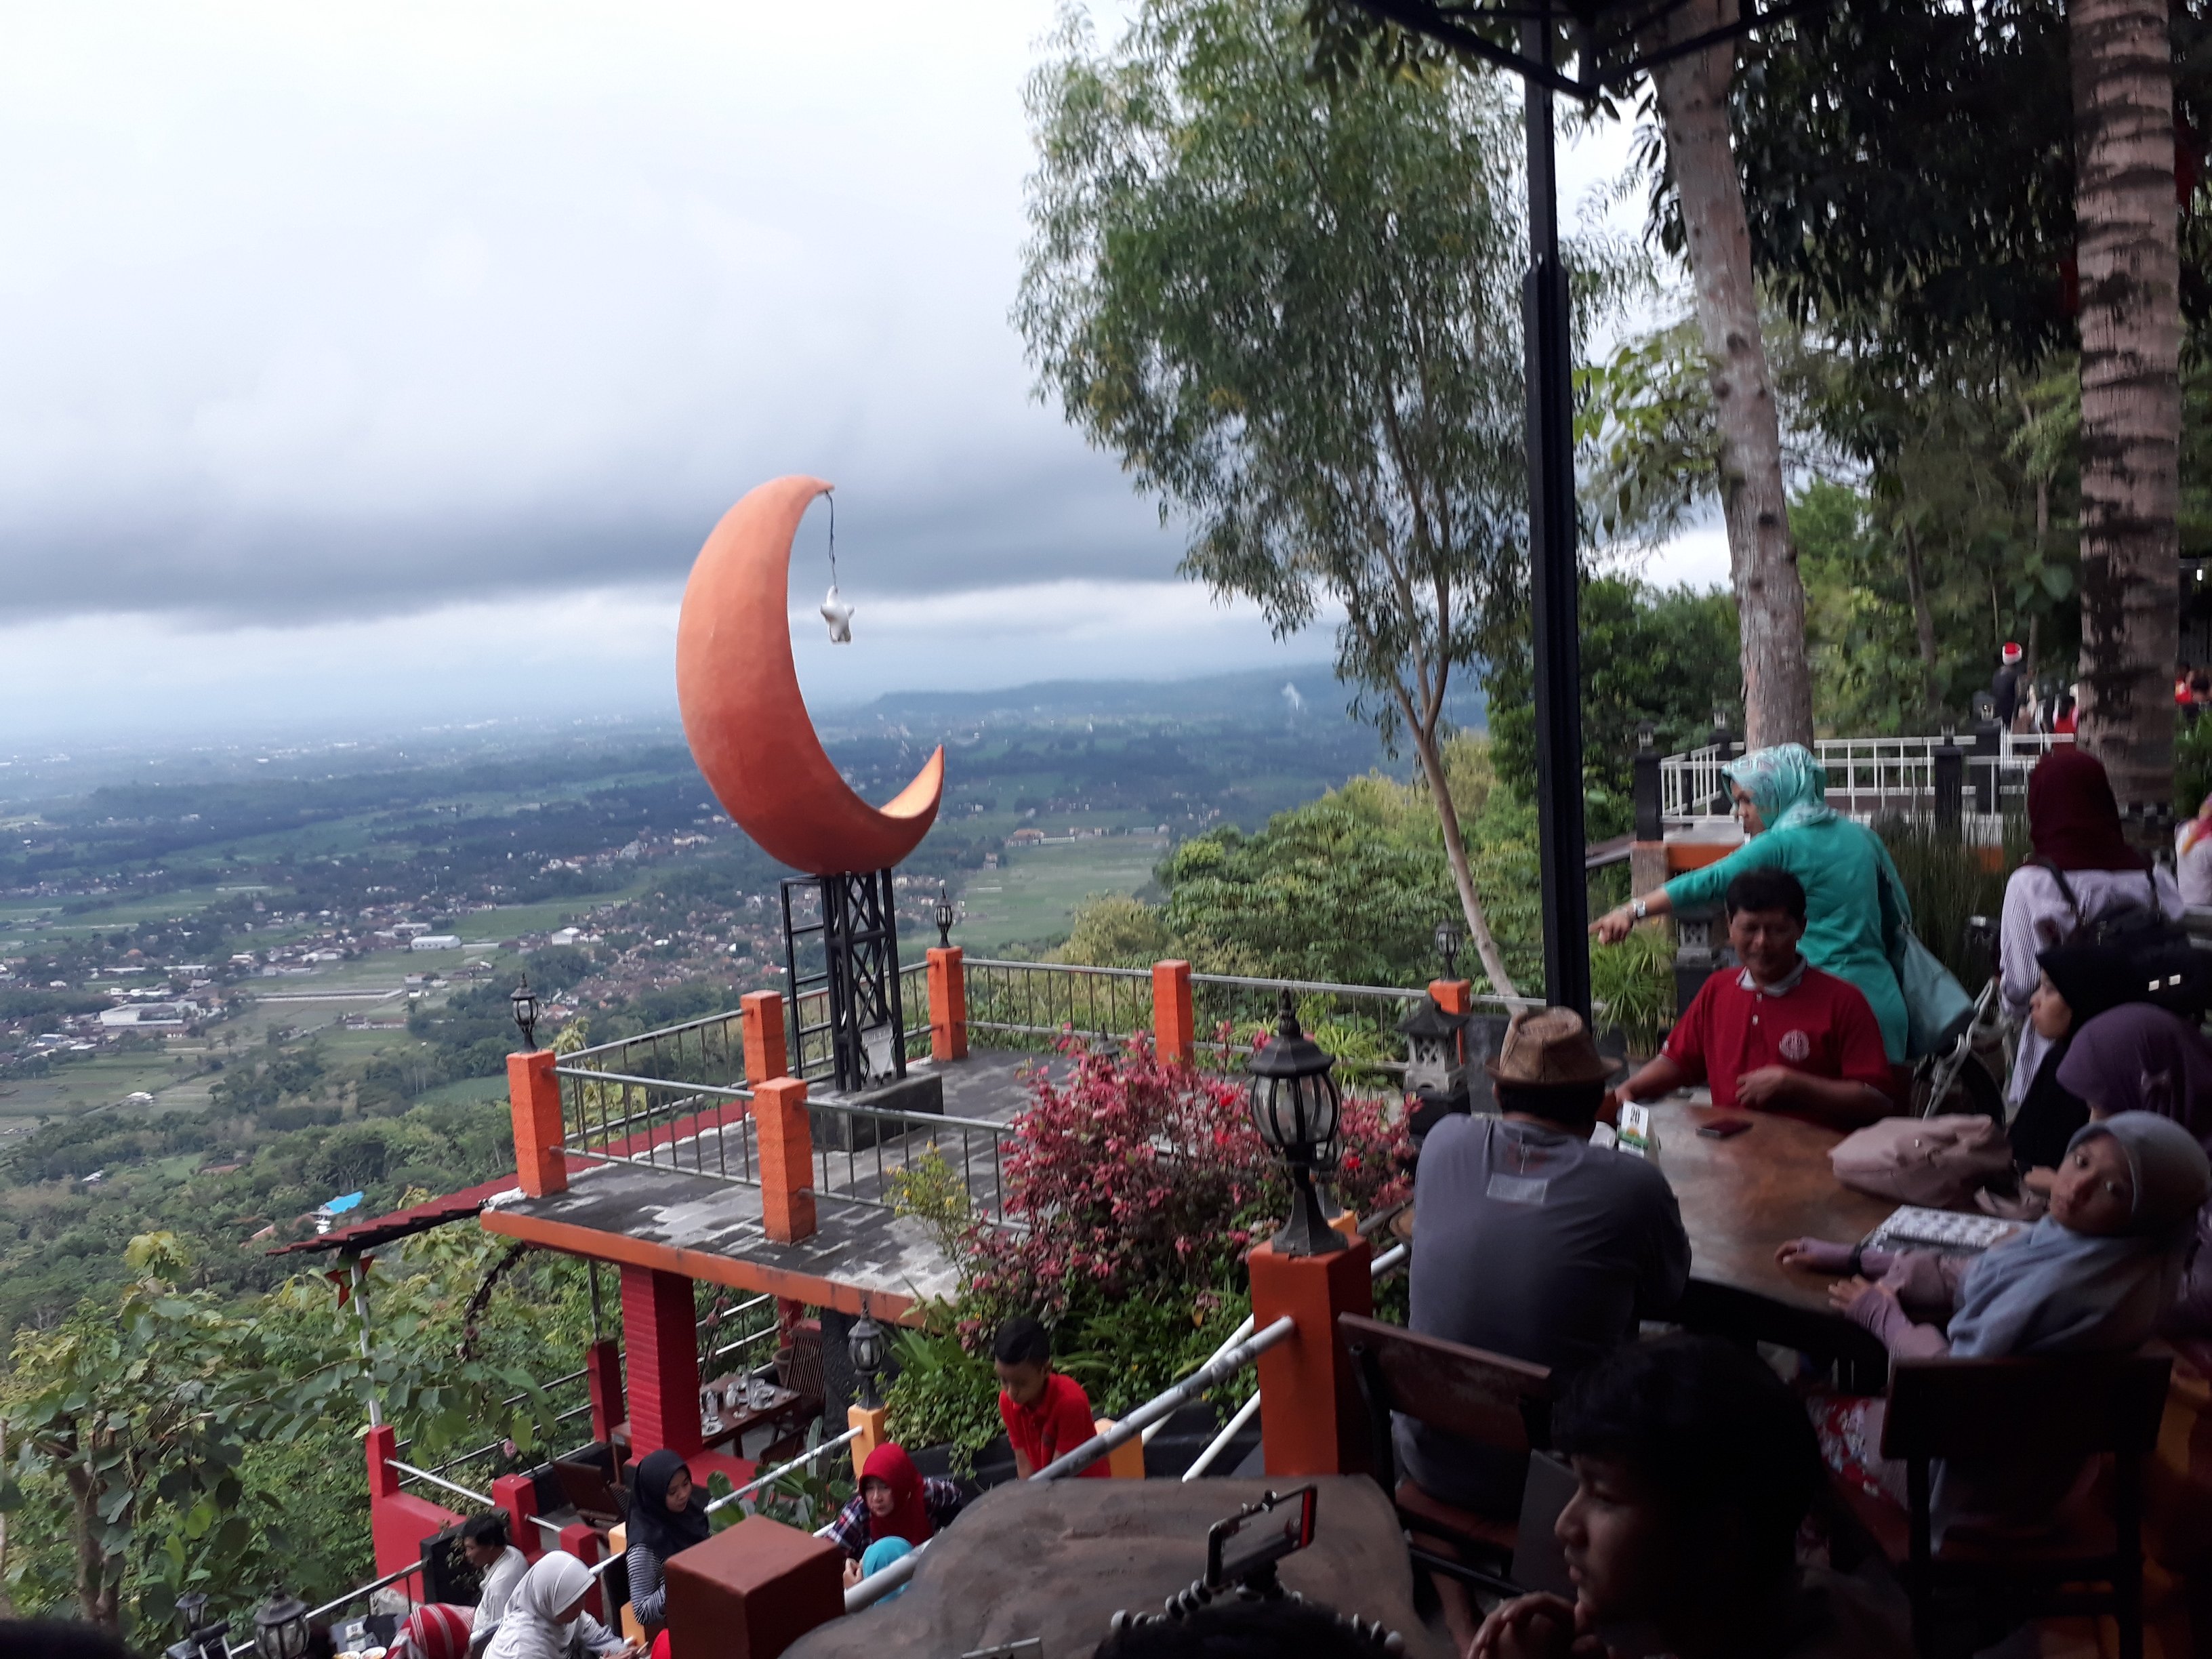 The Manglung View & Resto Yogya Wisata Kuliner Sambil Menikmati Alam